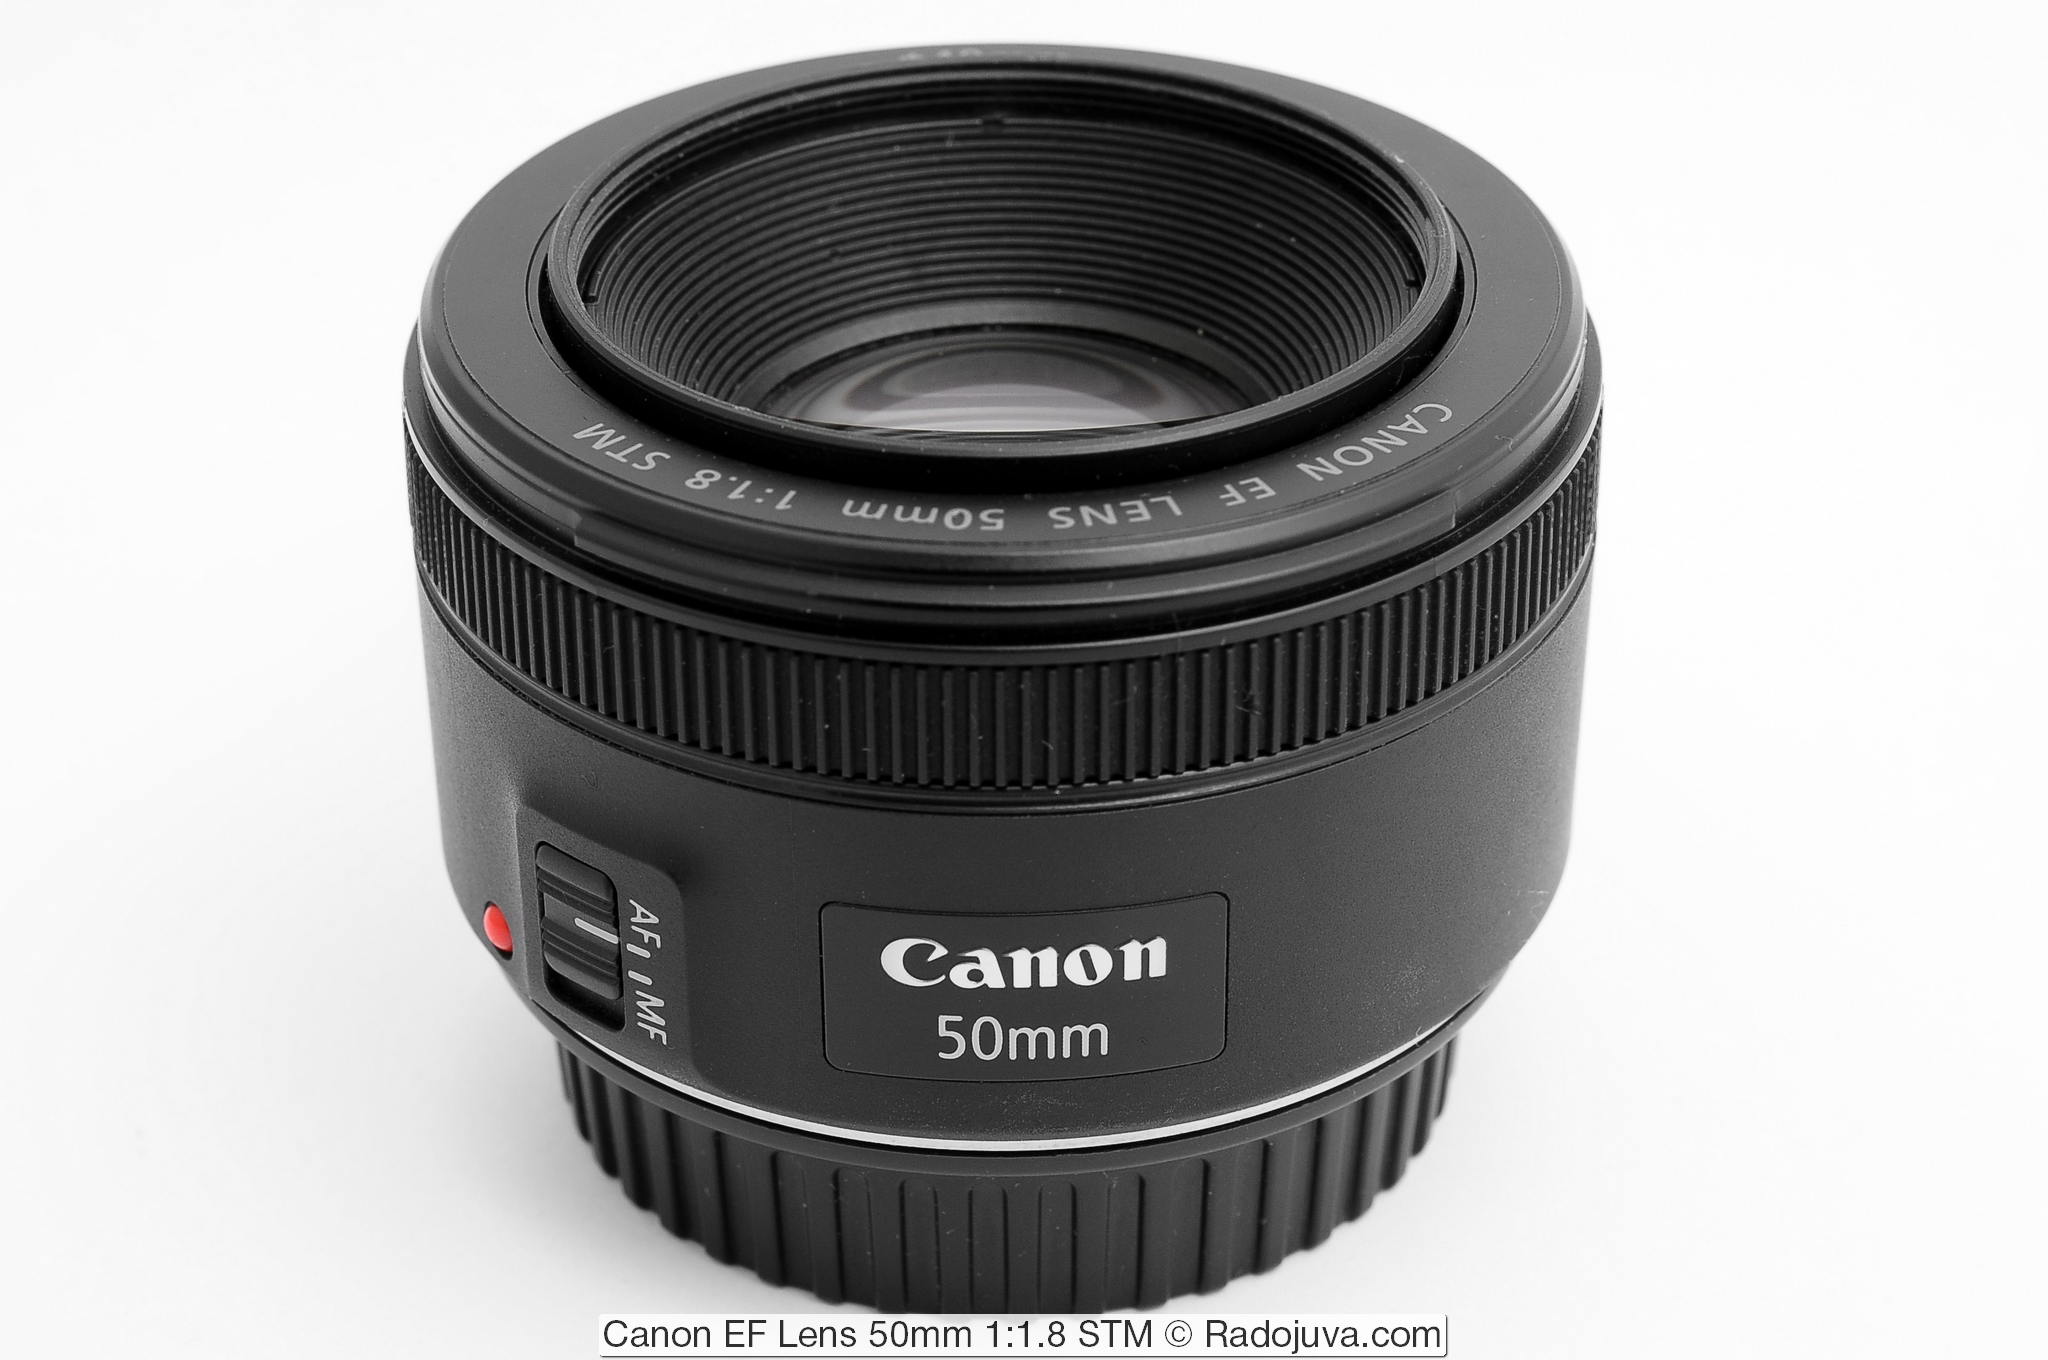 Canon EF Lens 50mm 1:1.8 STM